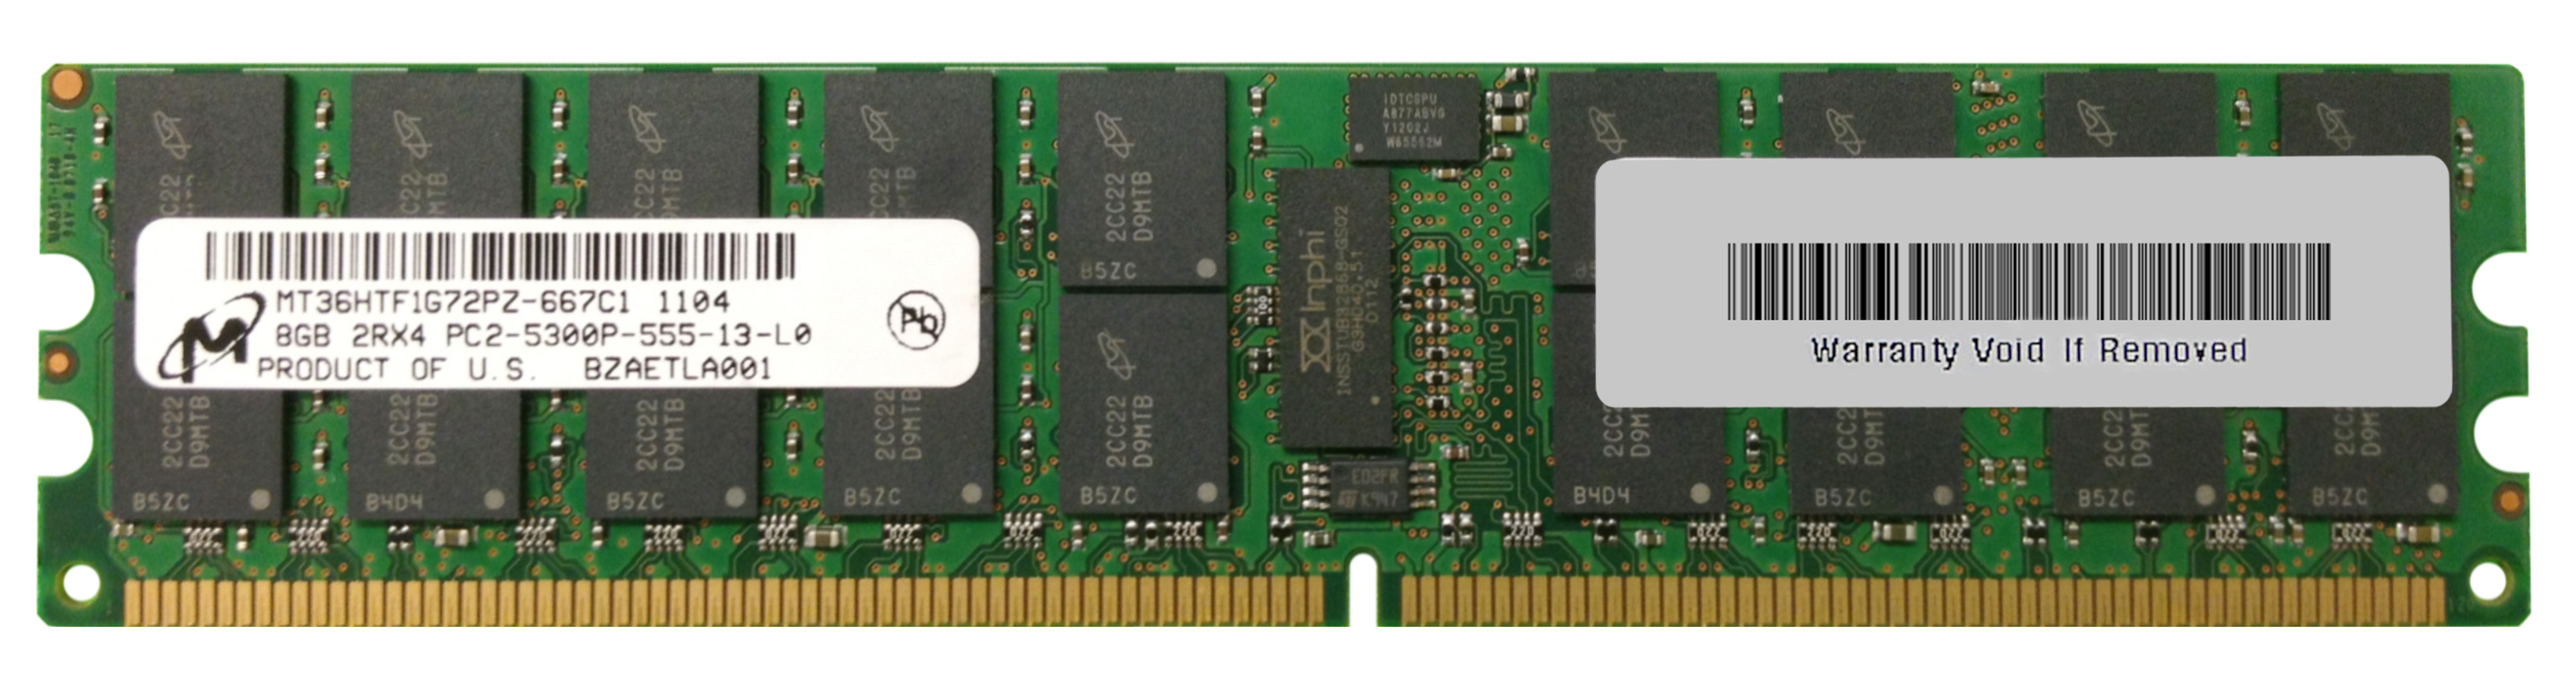 MT36HTF1G72PZ-667C1 Micron 8GB DDR2 PC5300 Memory